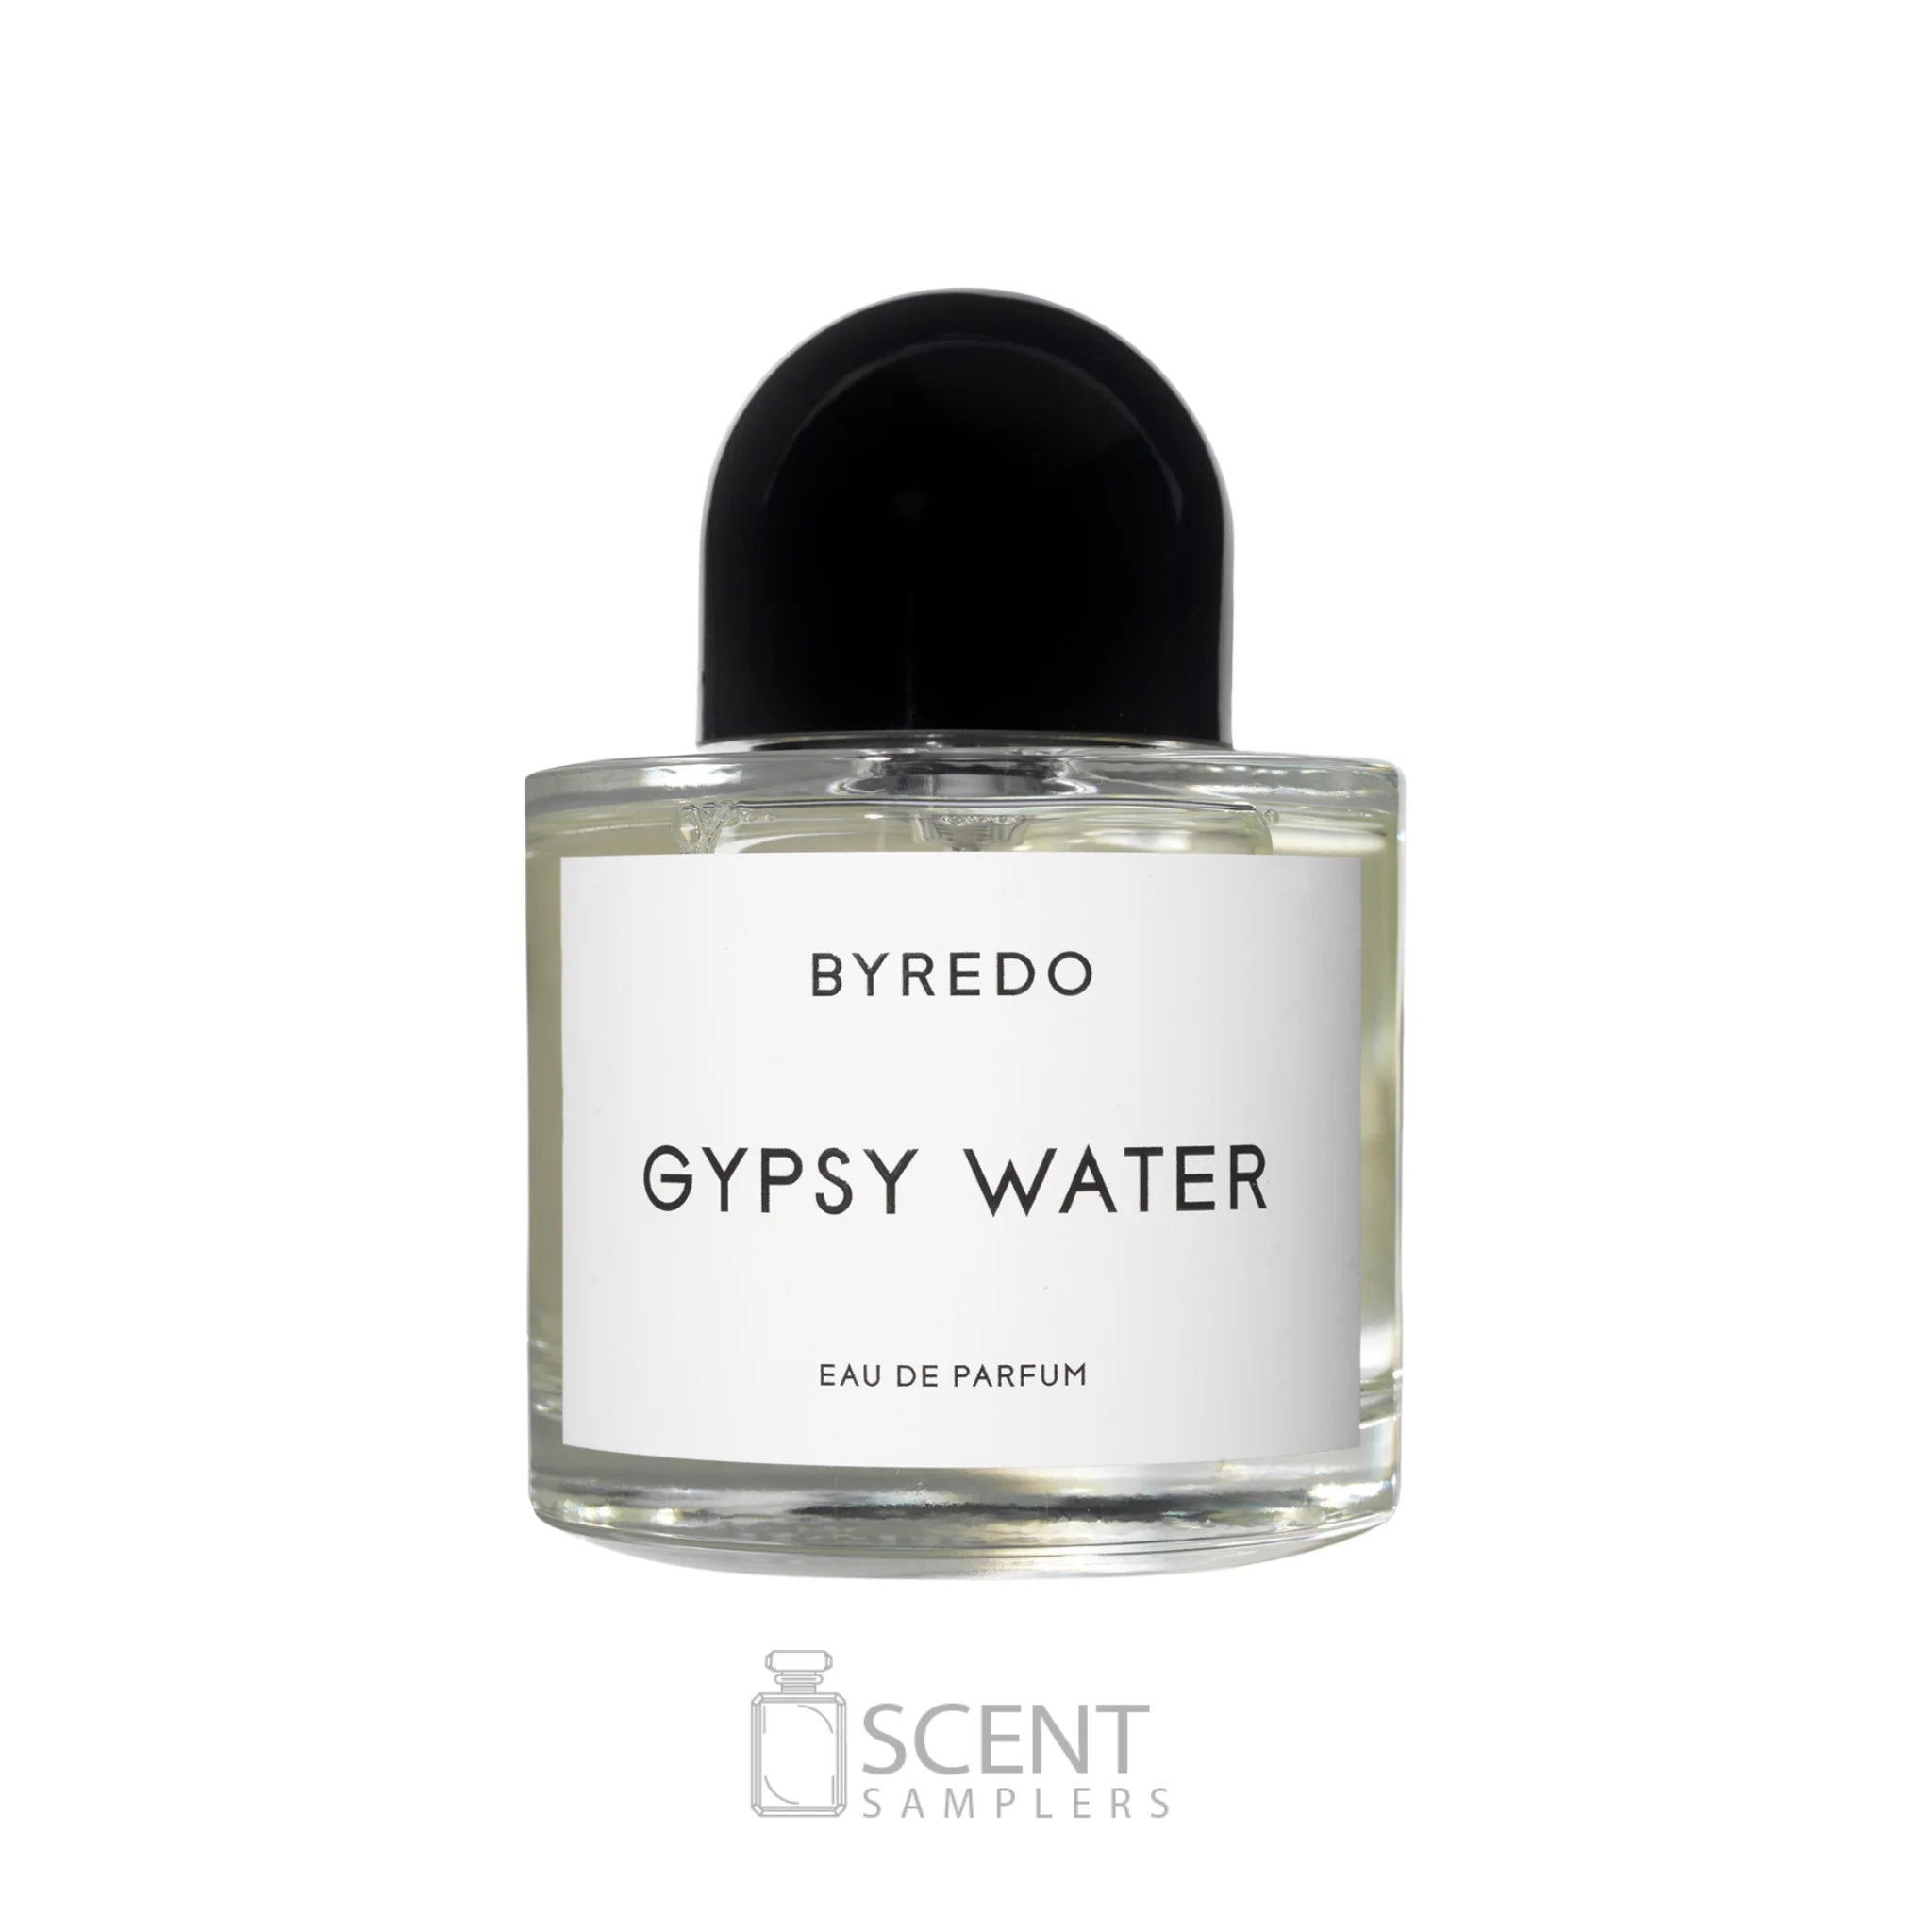 Get Byredo Perfume Samples in 2ml to 15ml - Scent Samplers